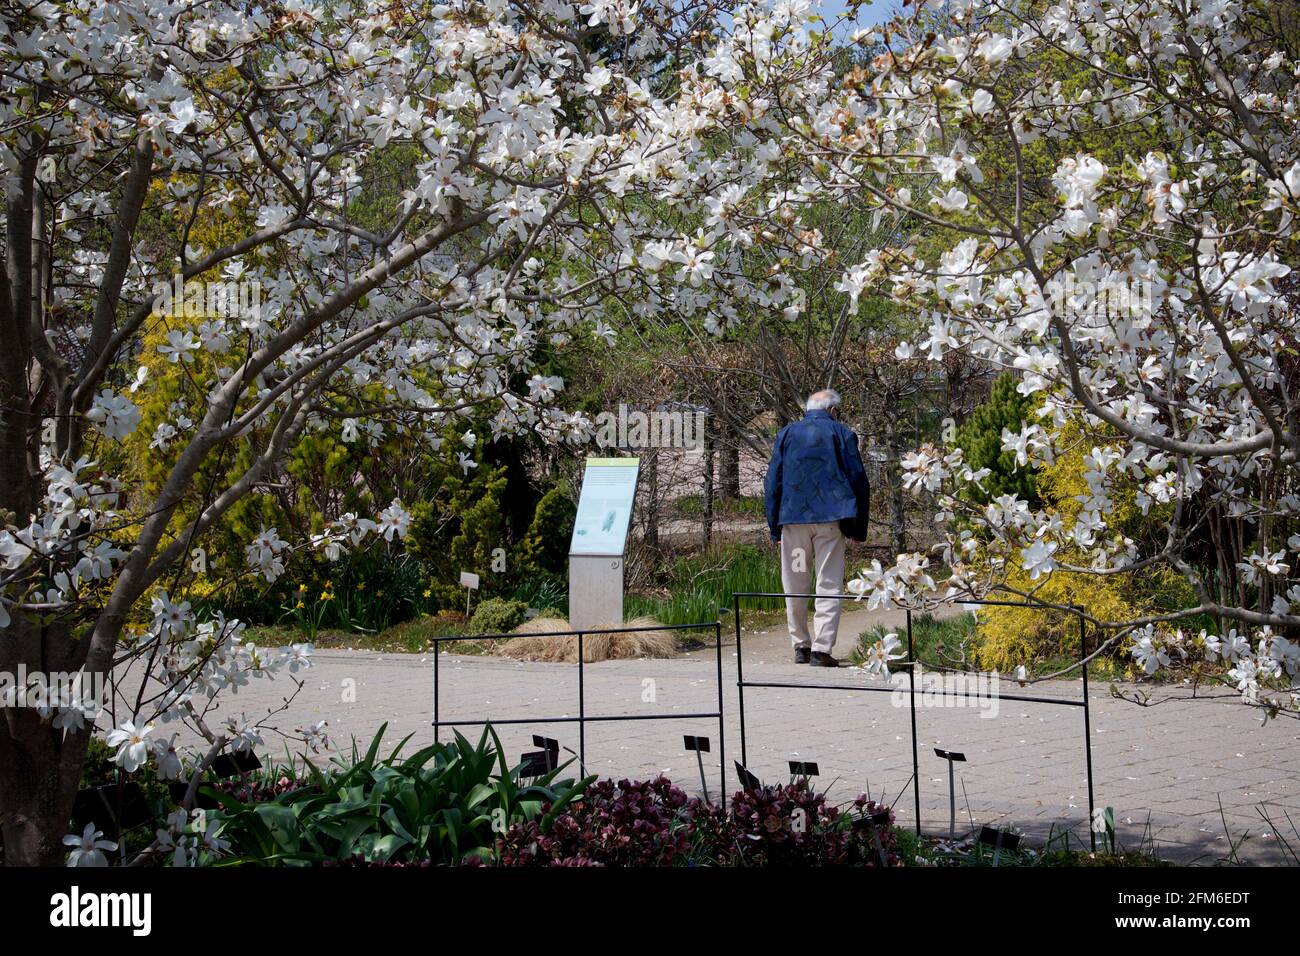 A senior adult enjoys the springtime at the park with blossom magnolia flowers. Stock Photo